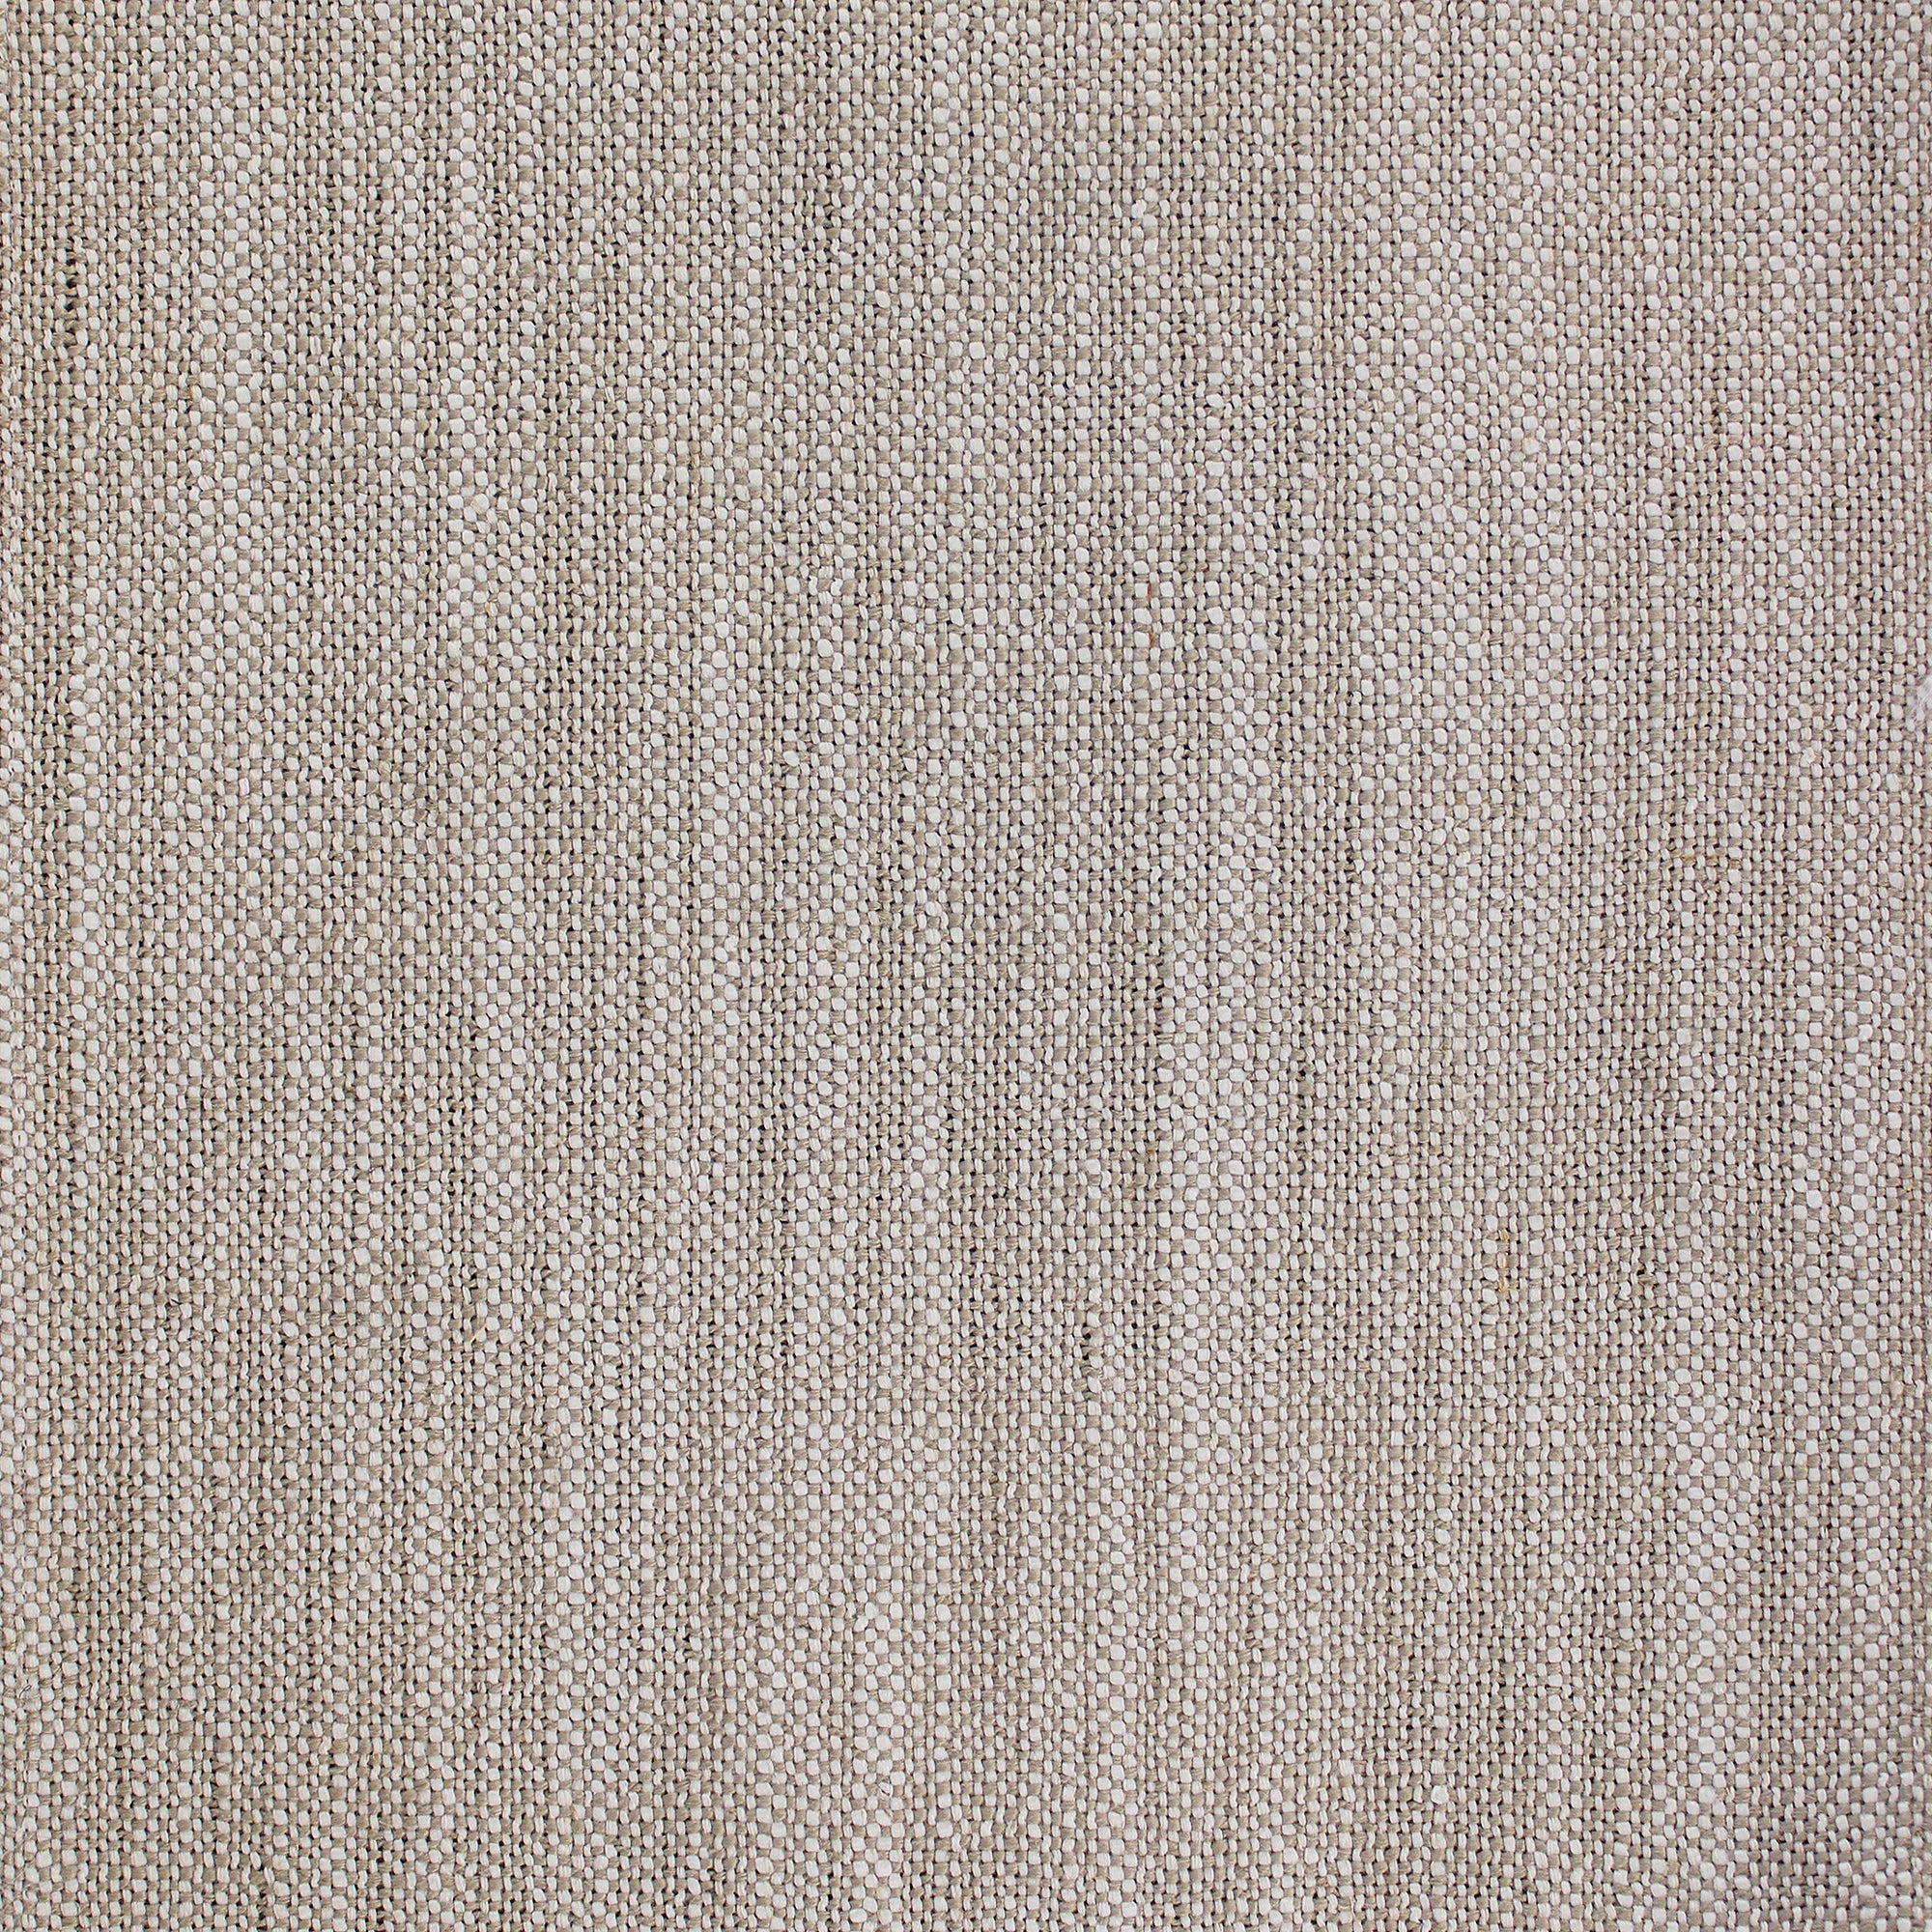 Aviva Fabric | Solid Textured Linen Blend